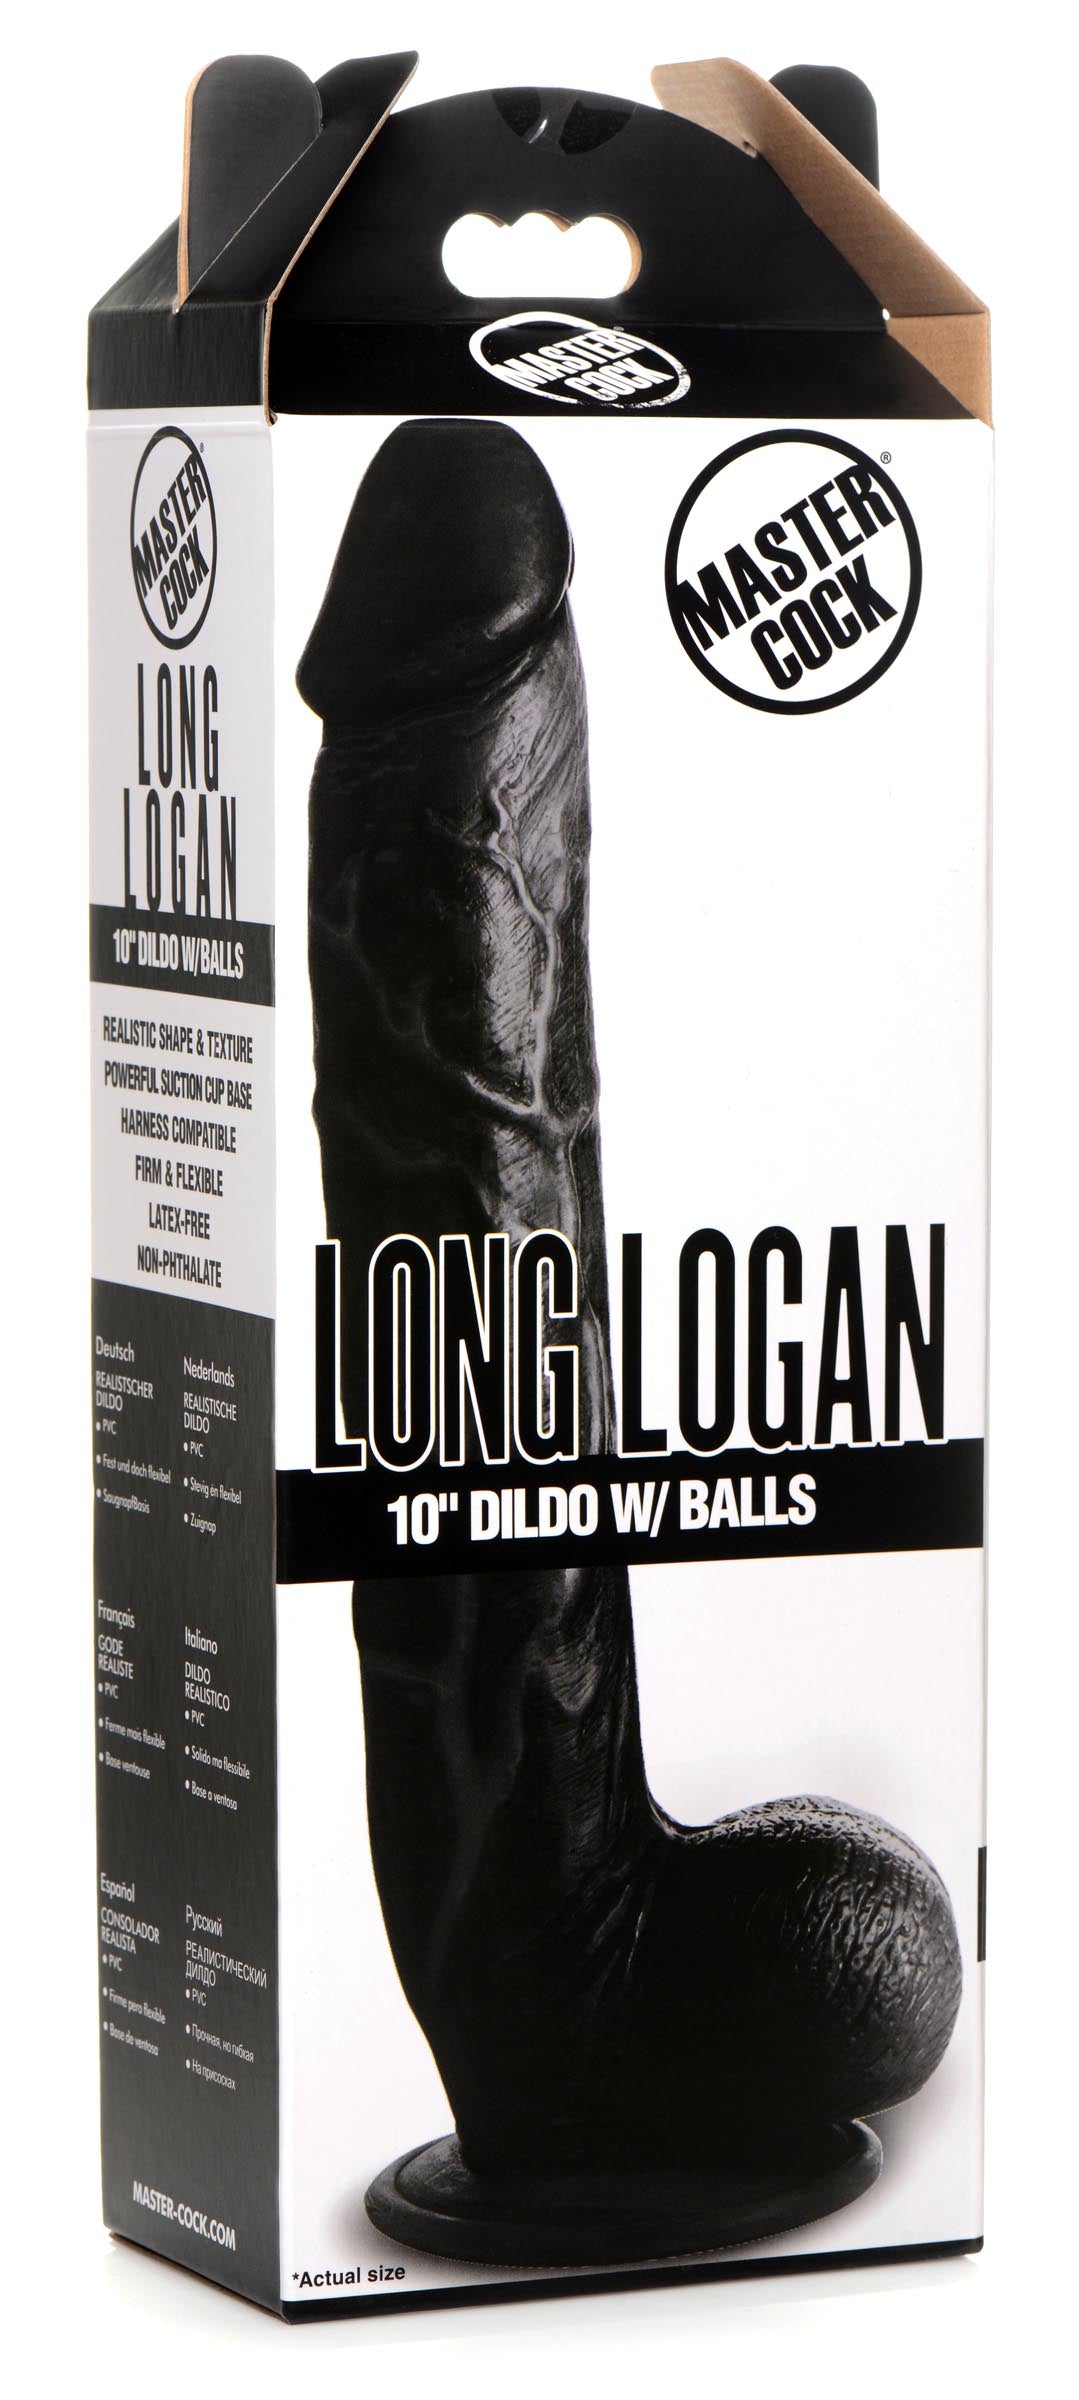 Long Logan 10 Inch Dildo With Balls - Black